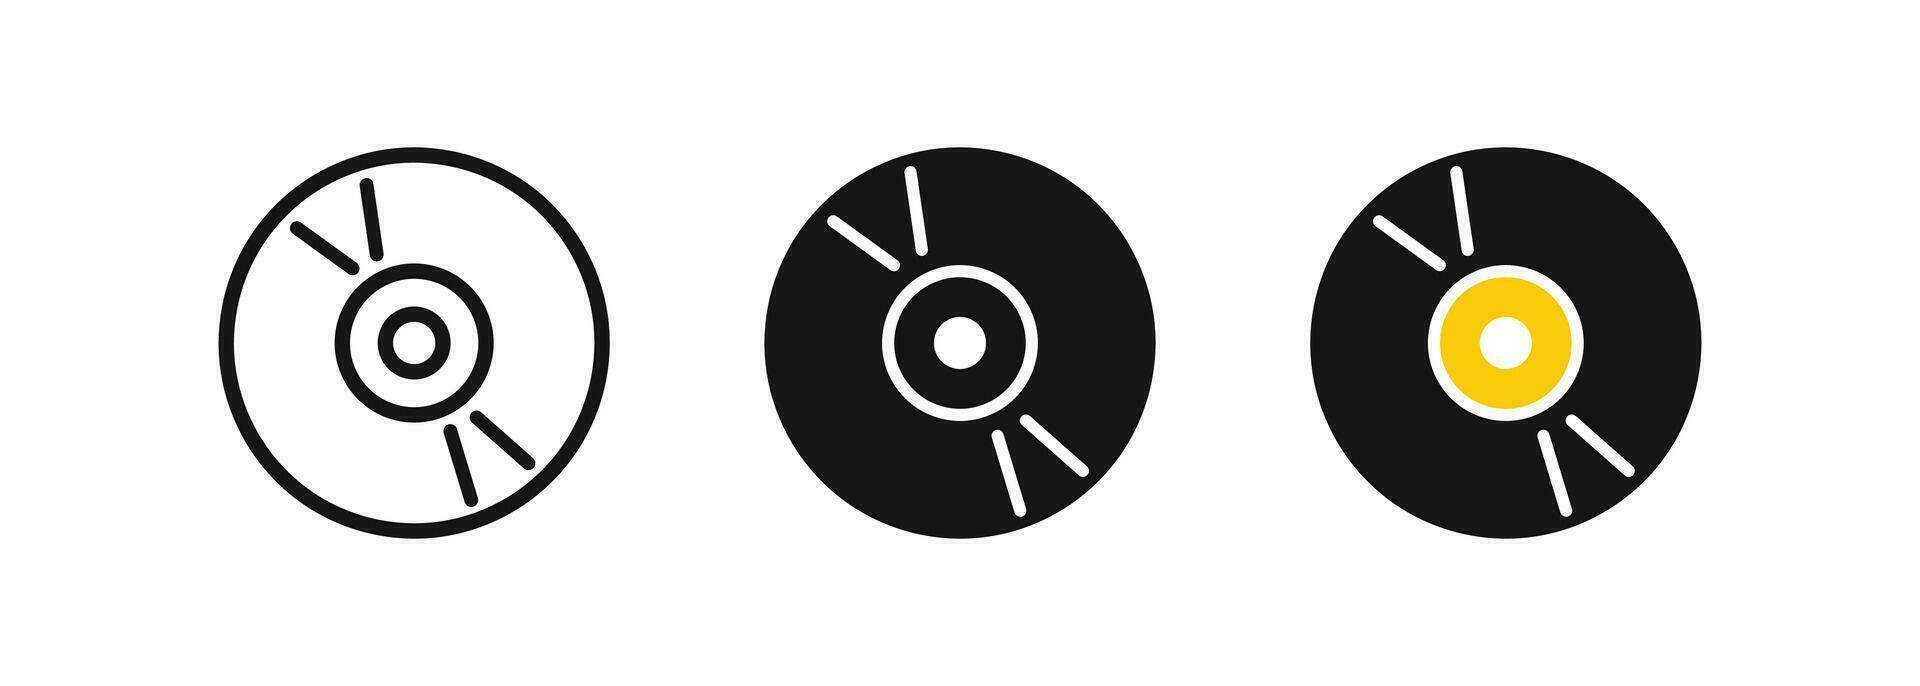 vinilo Dto icono. compacto disco símbolo. grabar música señales. placa giratoria simbolos retro álbum iconos negro, amarillo color. vector signo.